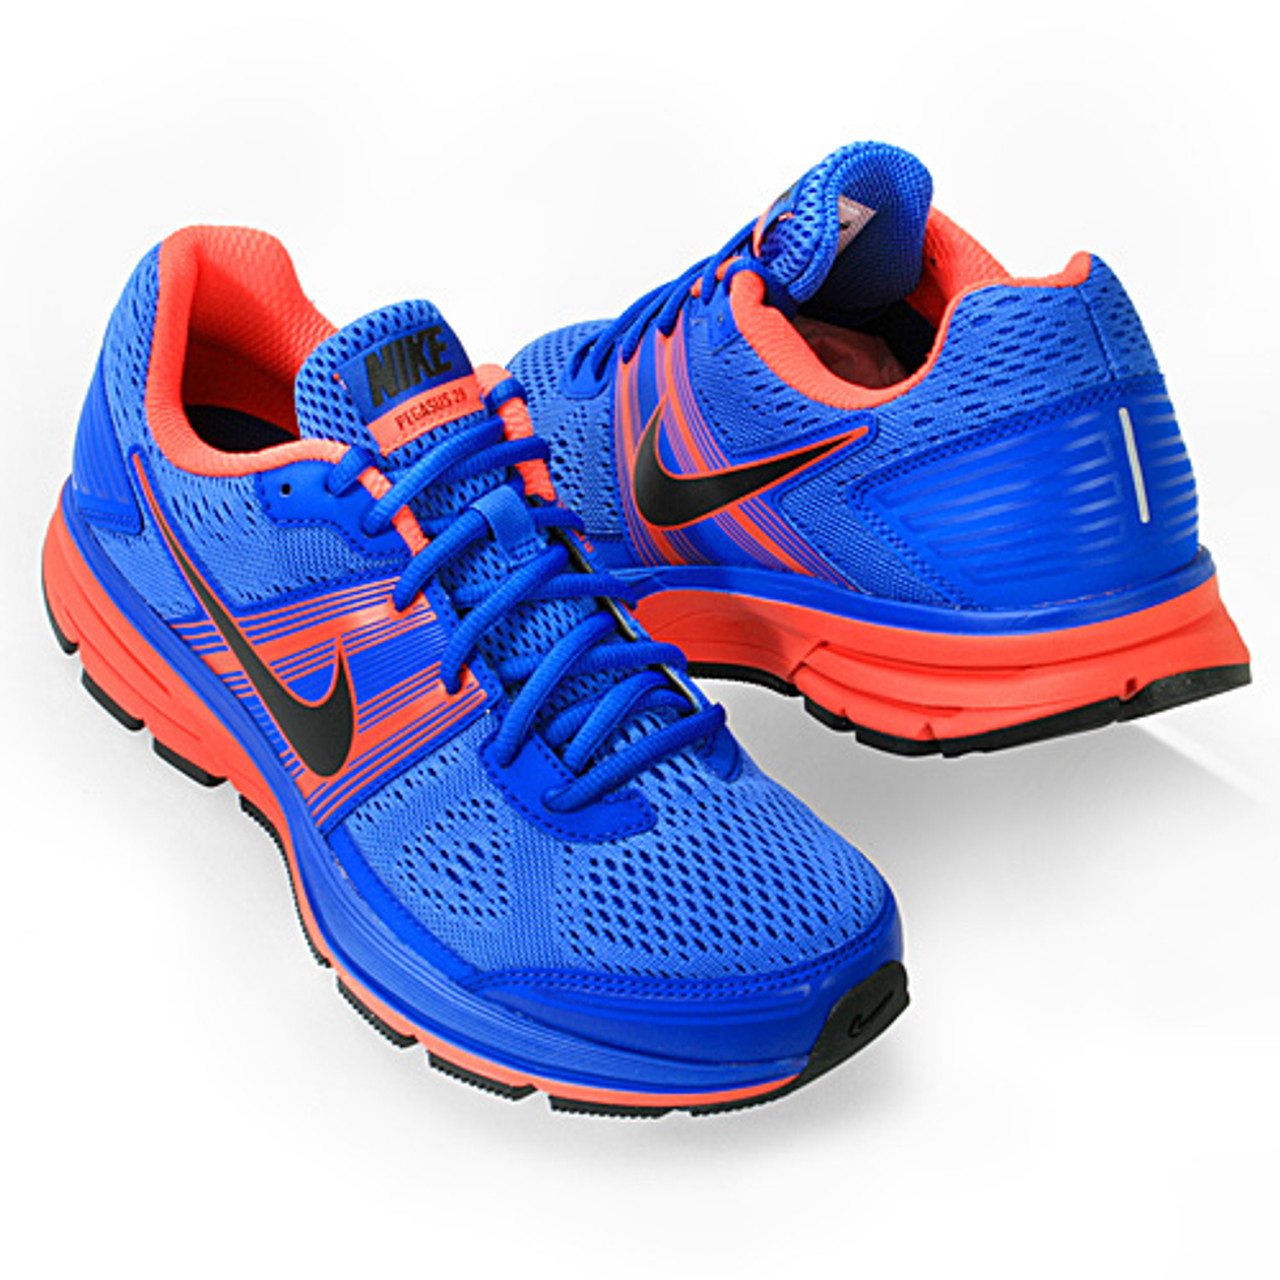 Nike Air Pegasus + 29 Blue/Red - | Discount Nike Men's Athletic & More -  Shoolu.com | Shoolu.com